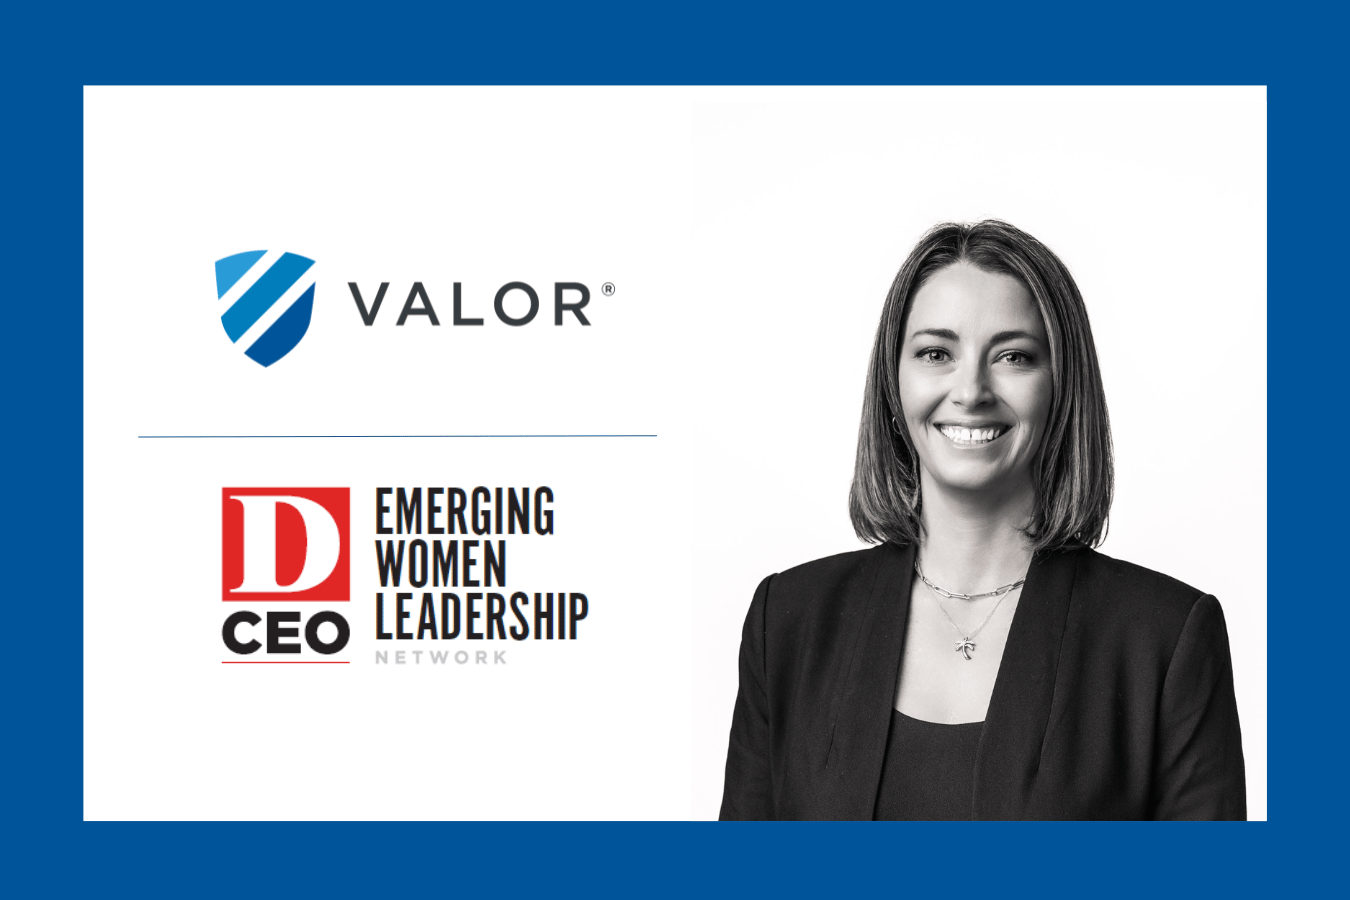 Valor COO Hanna Howard Completes D CEO Leadership Program 